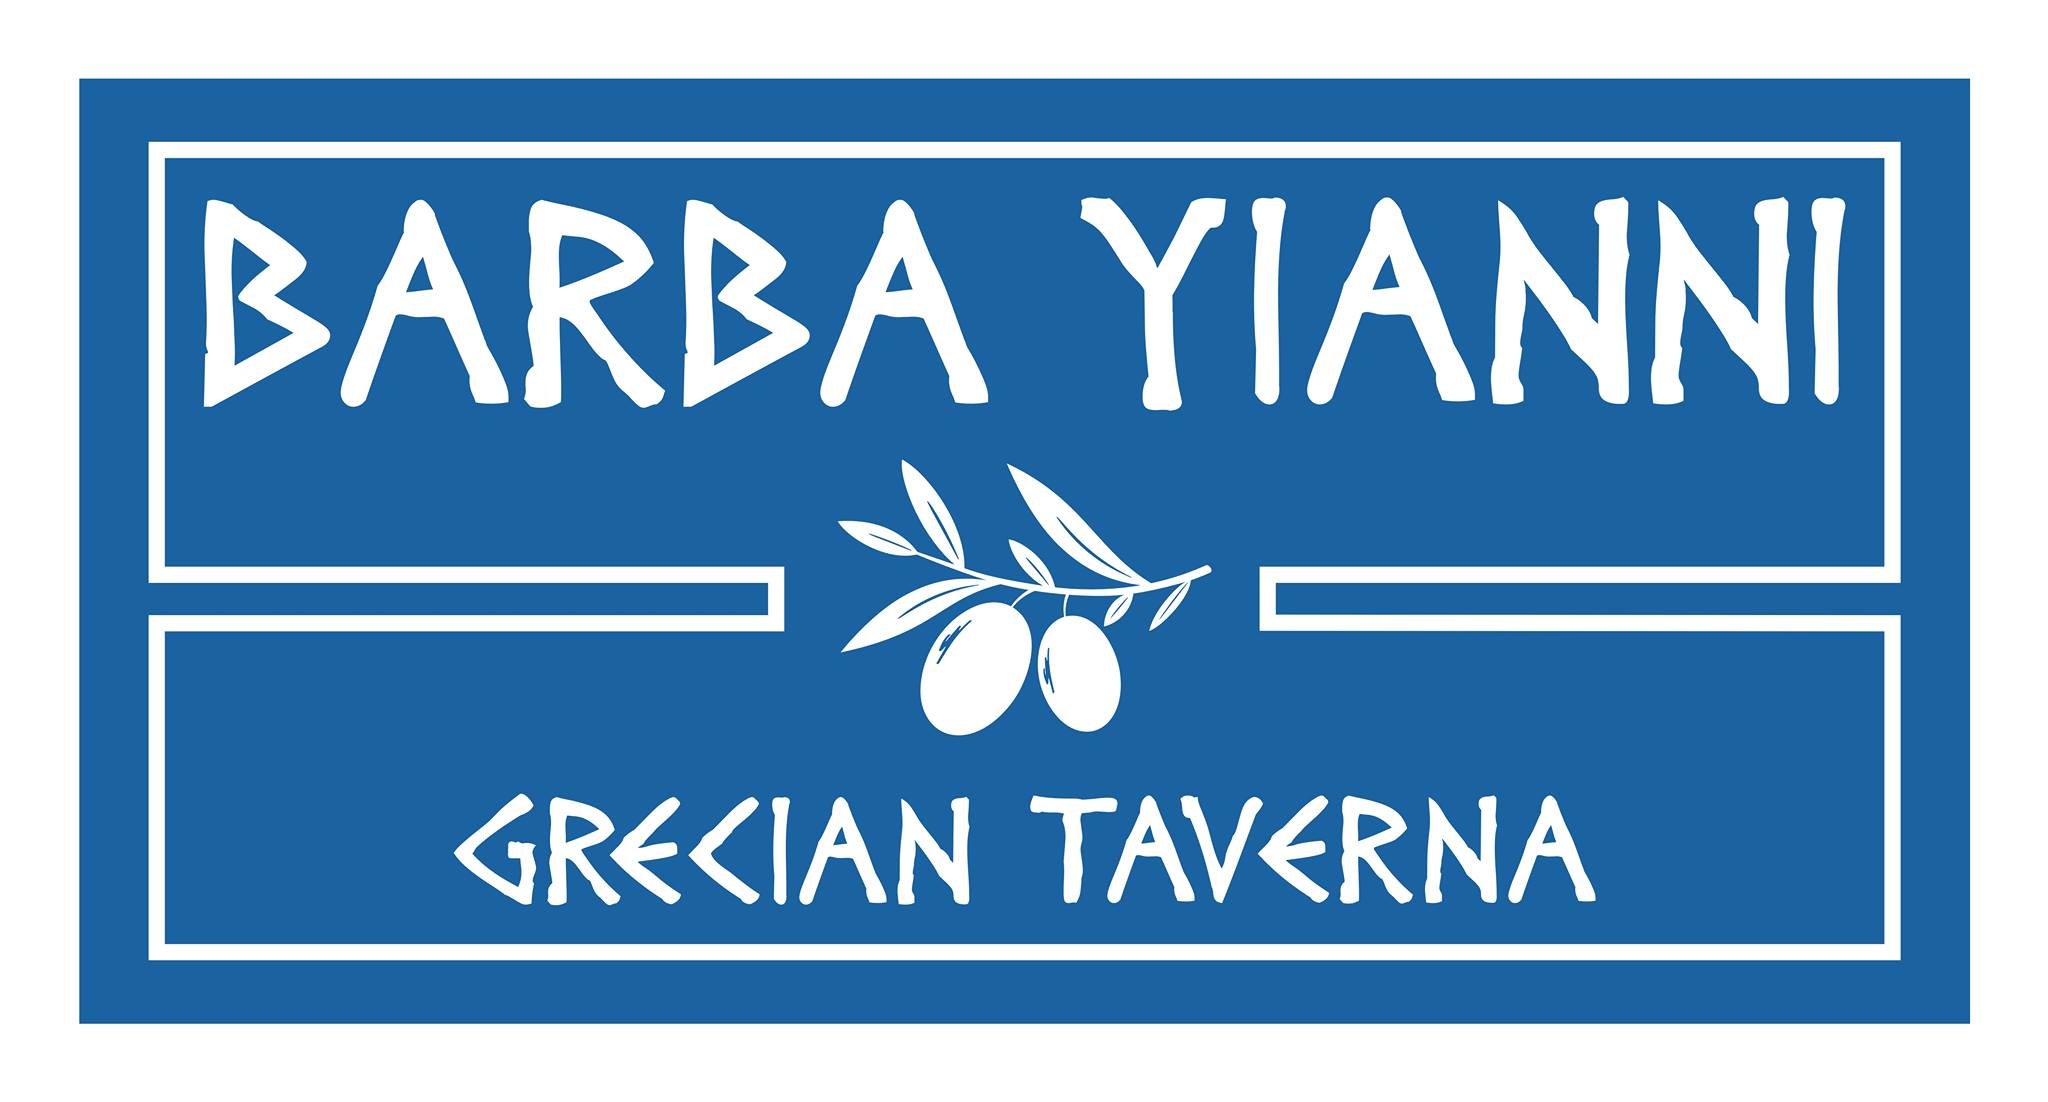 Barba Yianni Grecian Taverna